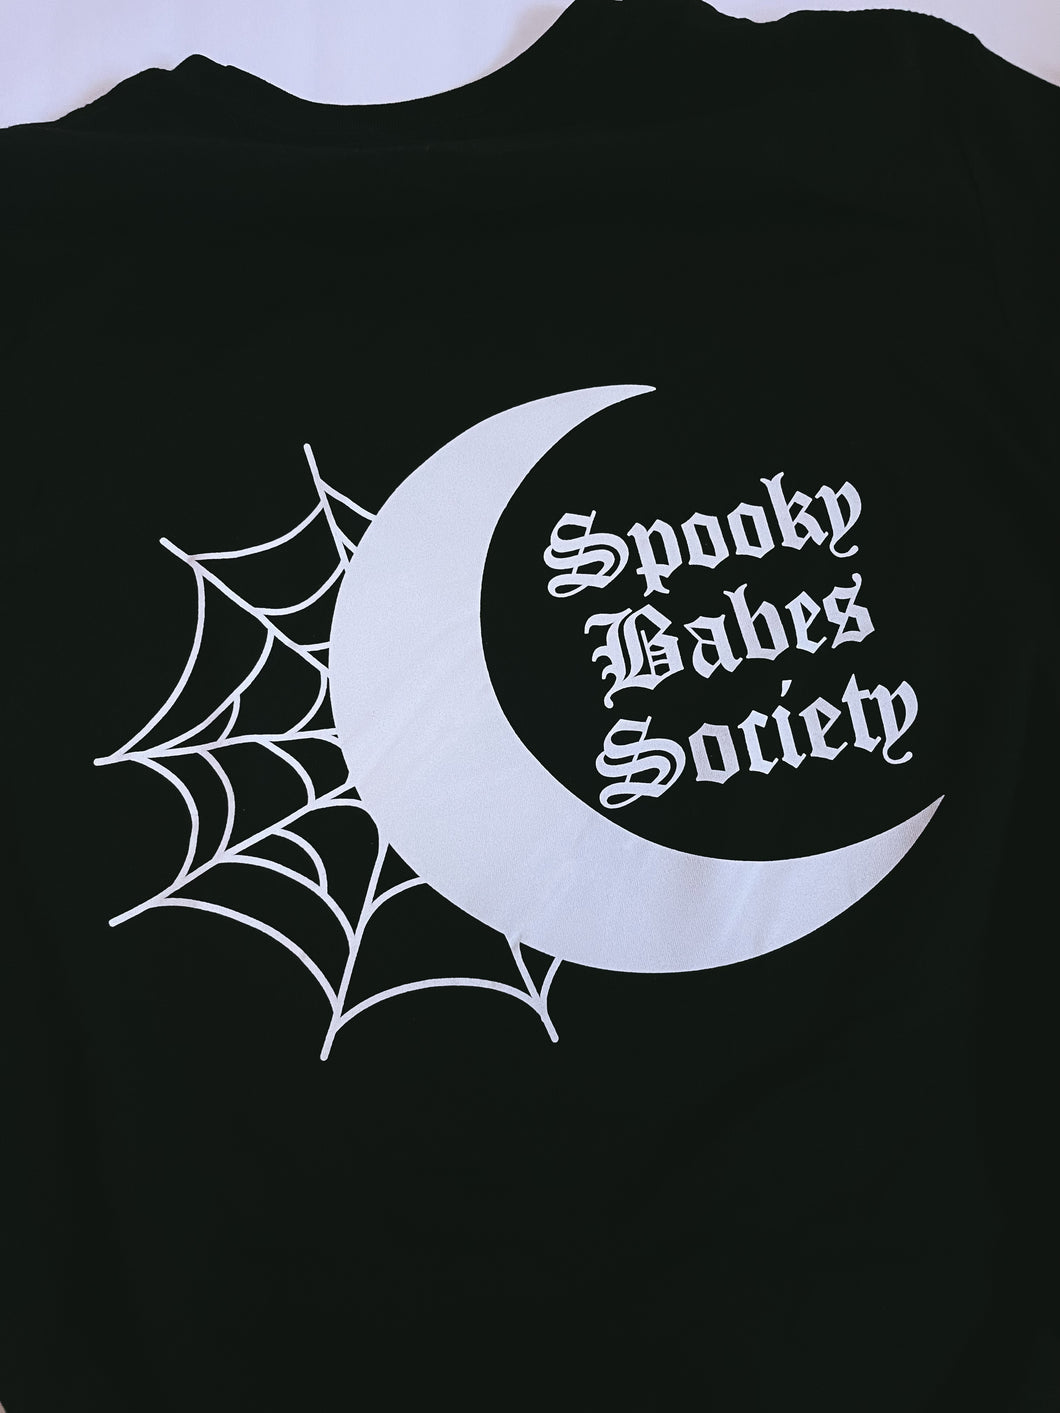 Spooky Babes Club